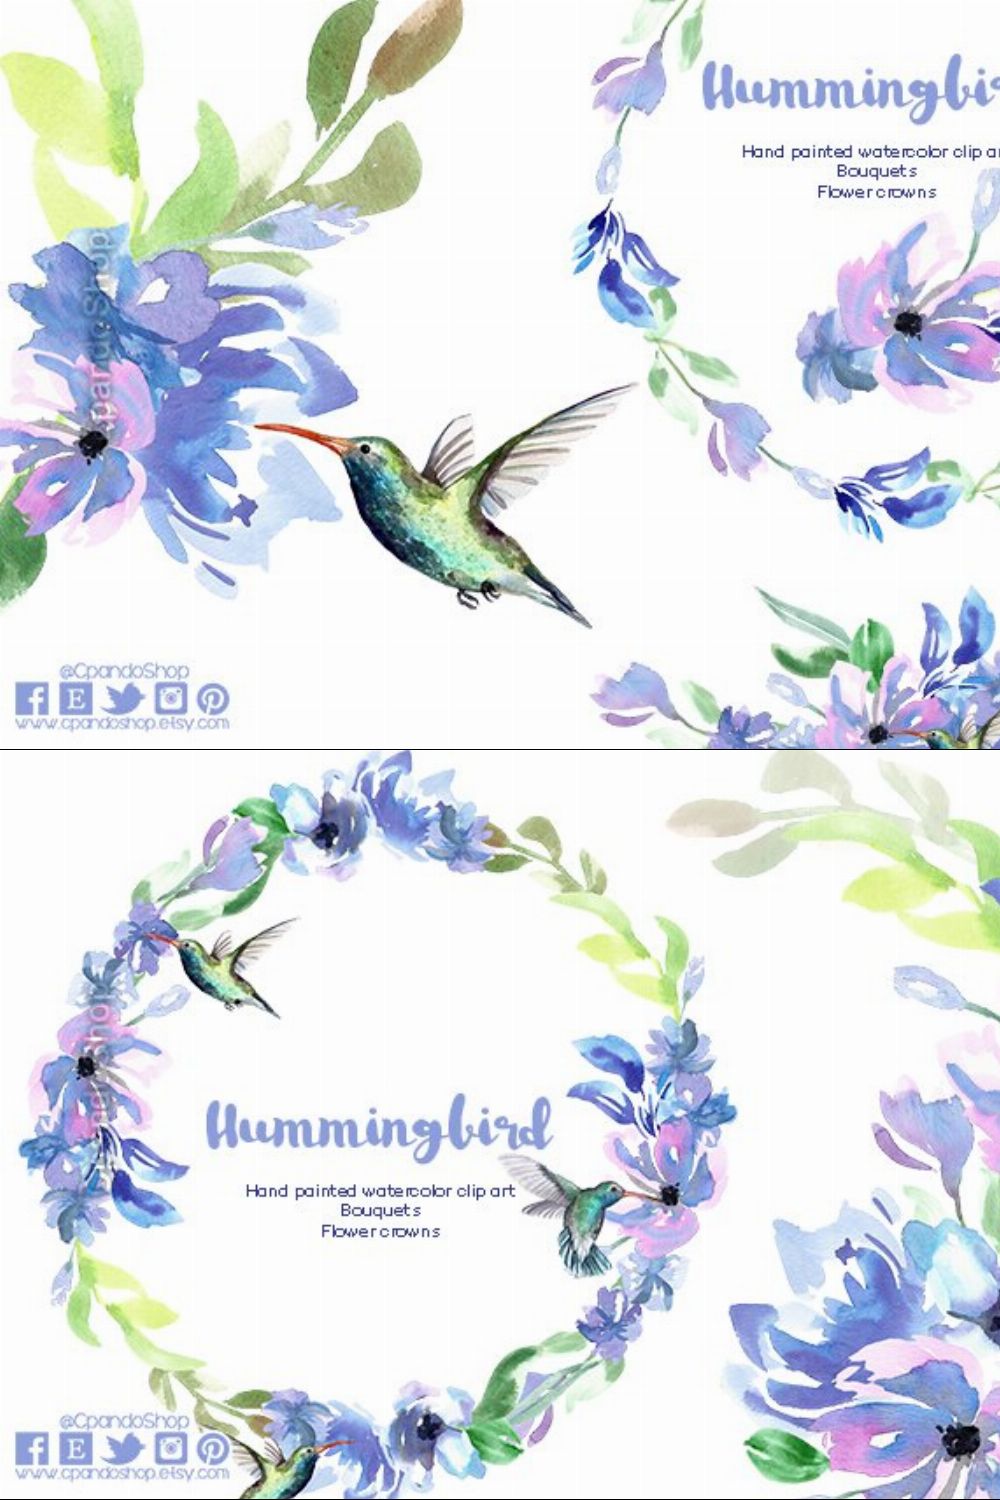 Hummingbird watercolor clip art pinterest preview image.